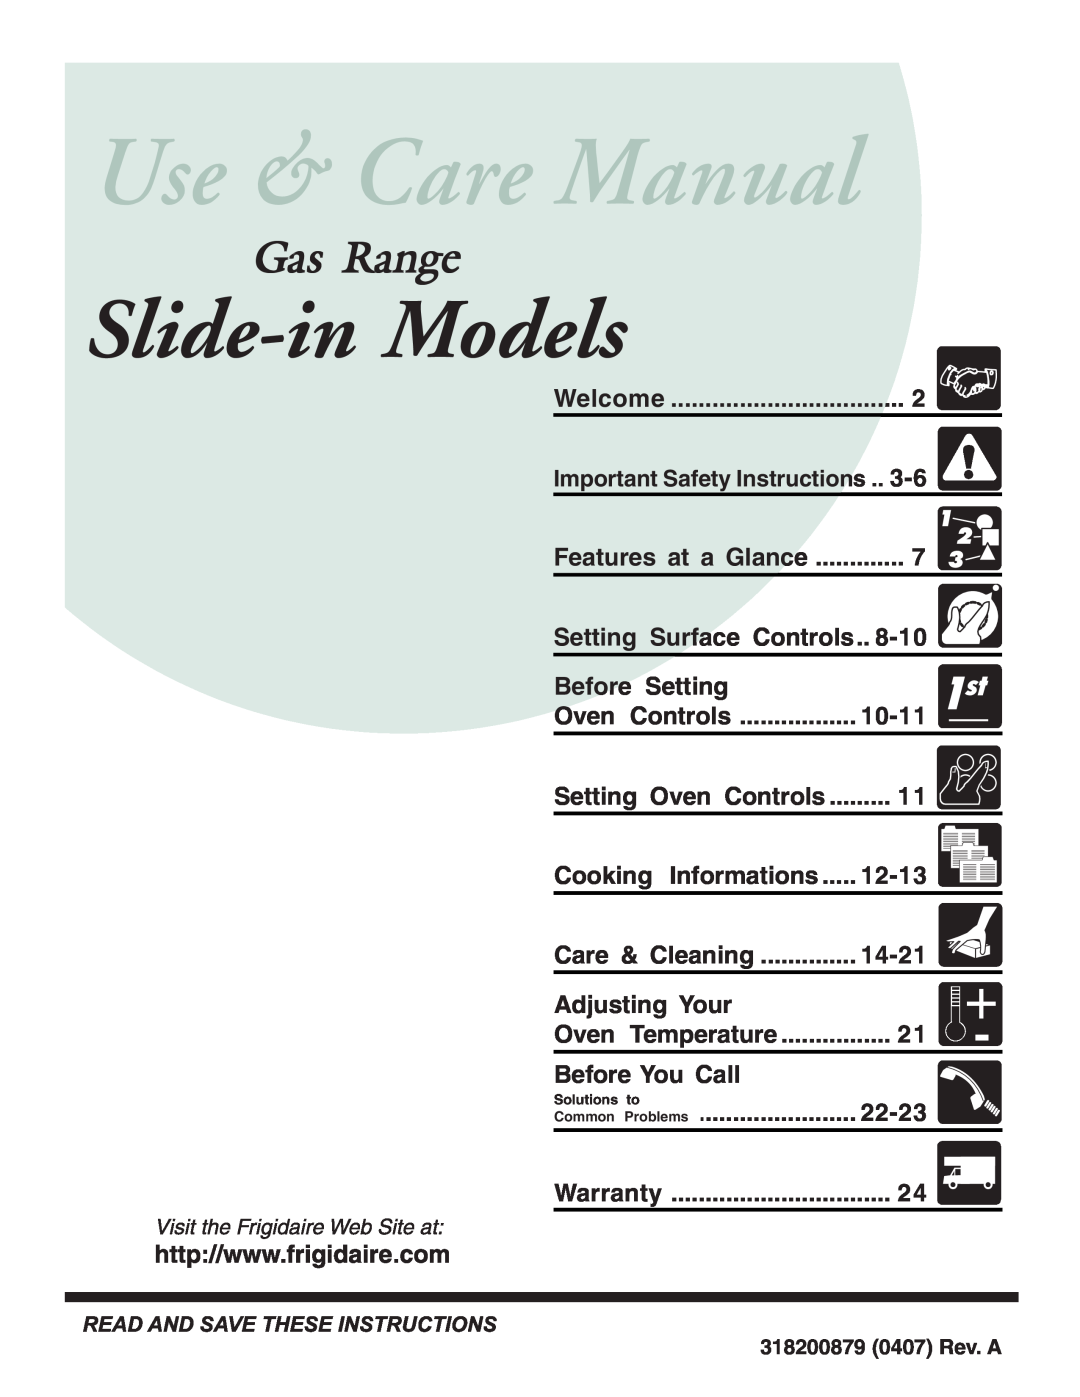 Frigidaire 318200879 manual Slide-in Models, Gas Range 